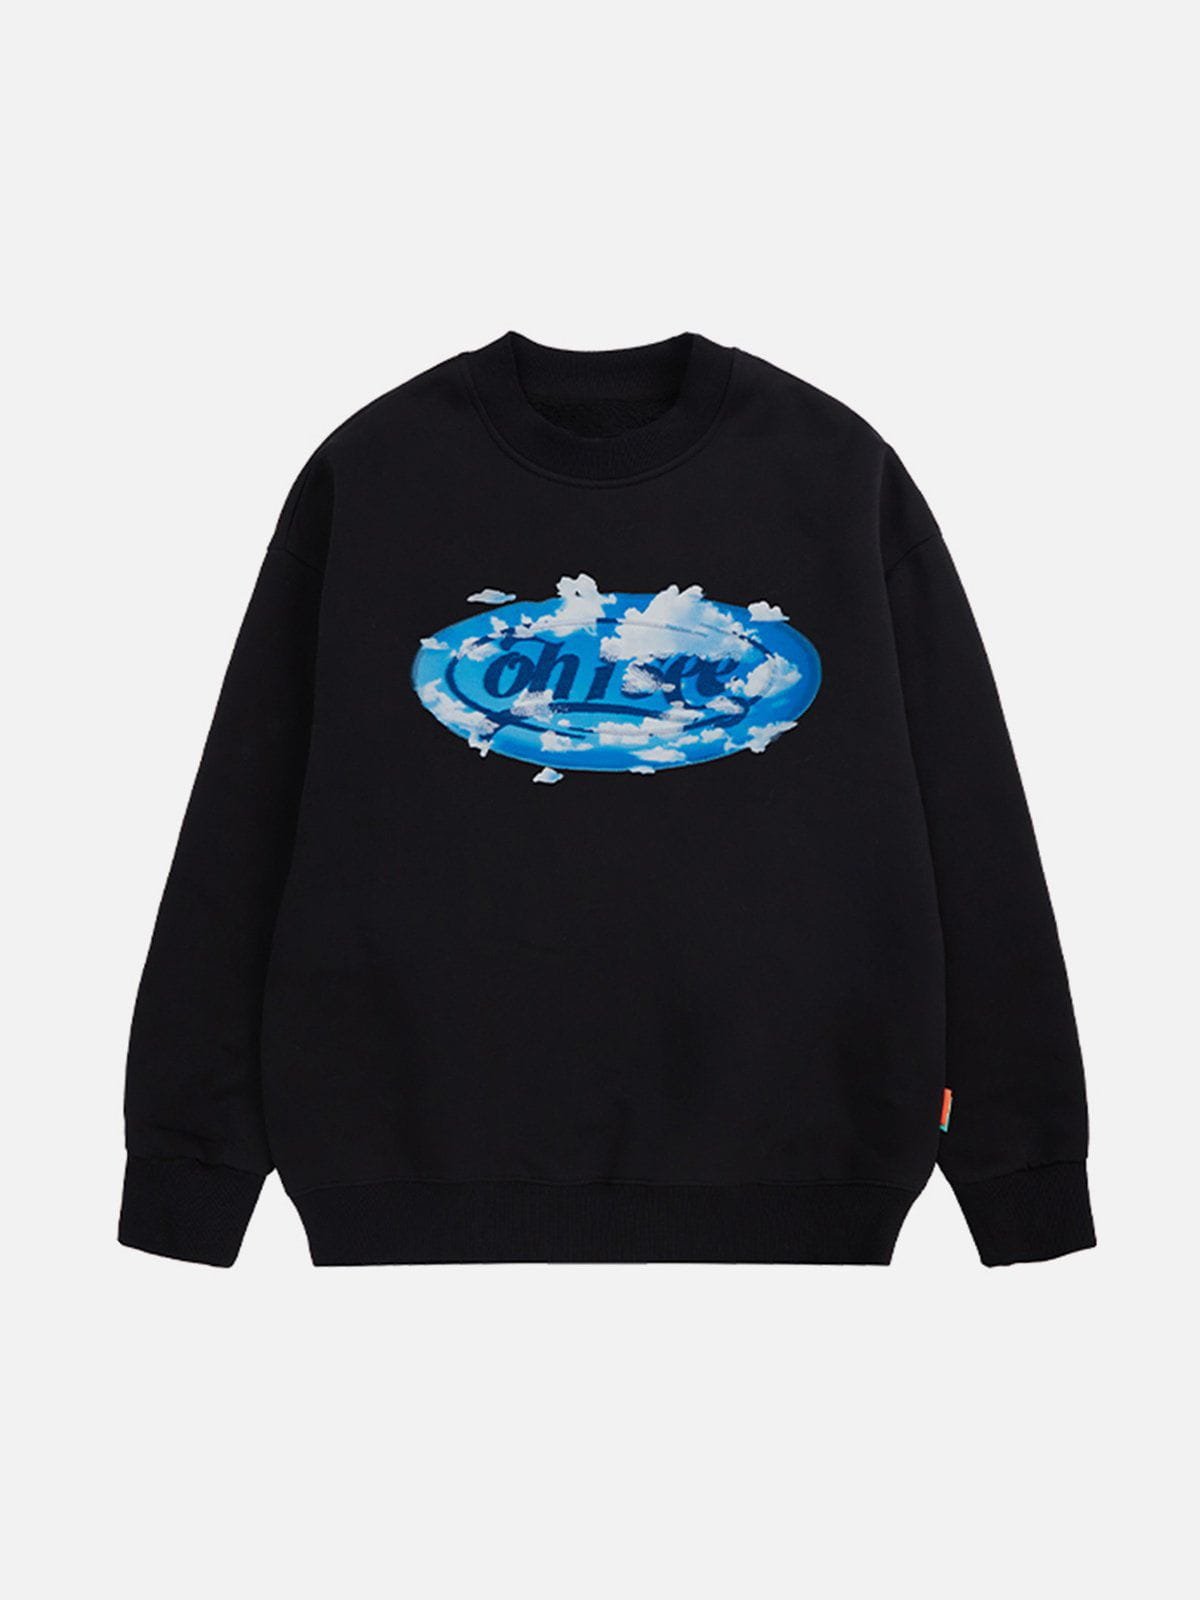 LUXENFY™ - Blue Sky Print Sweatshirt luxenfy.com